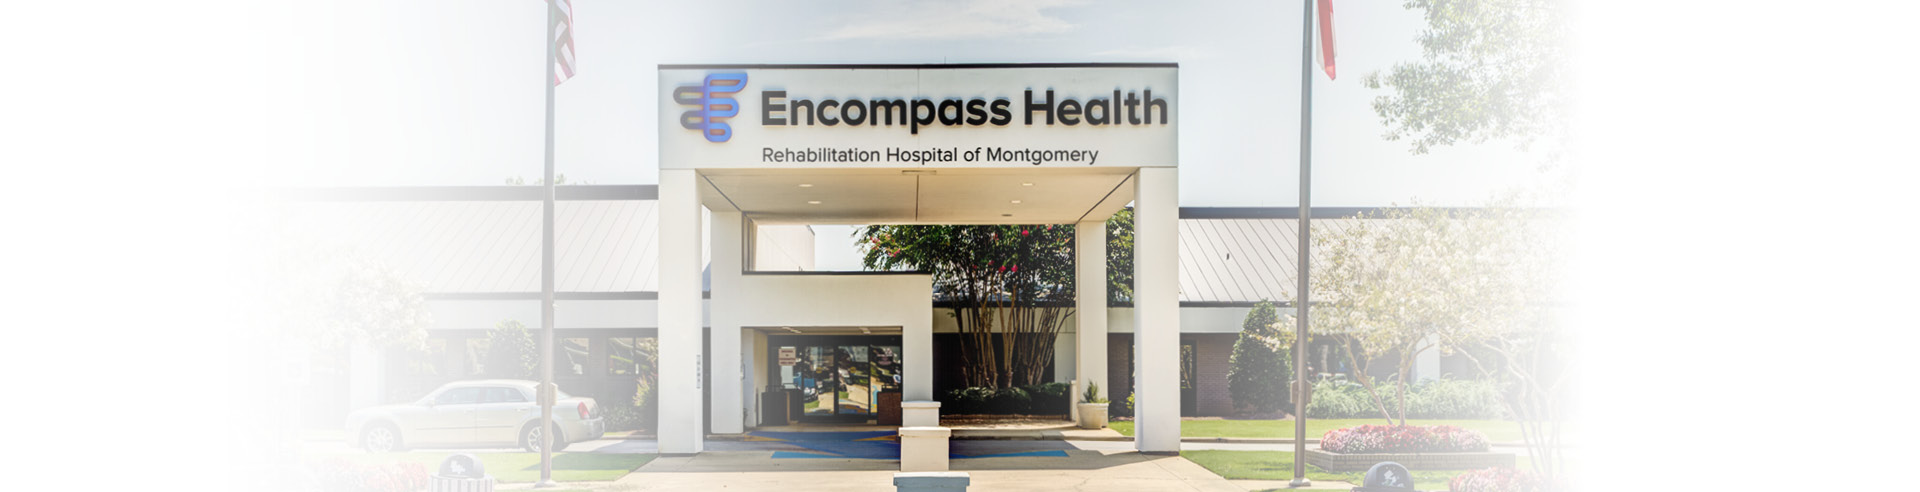 Encompass Health Rehabilitation Hospital of Montgomery exterior